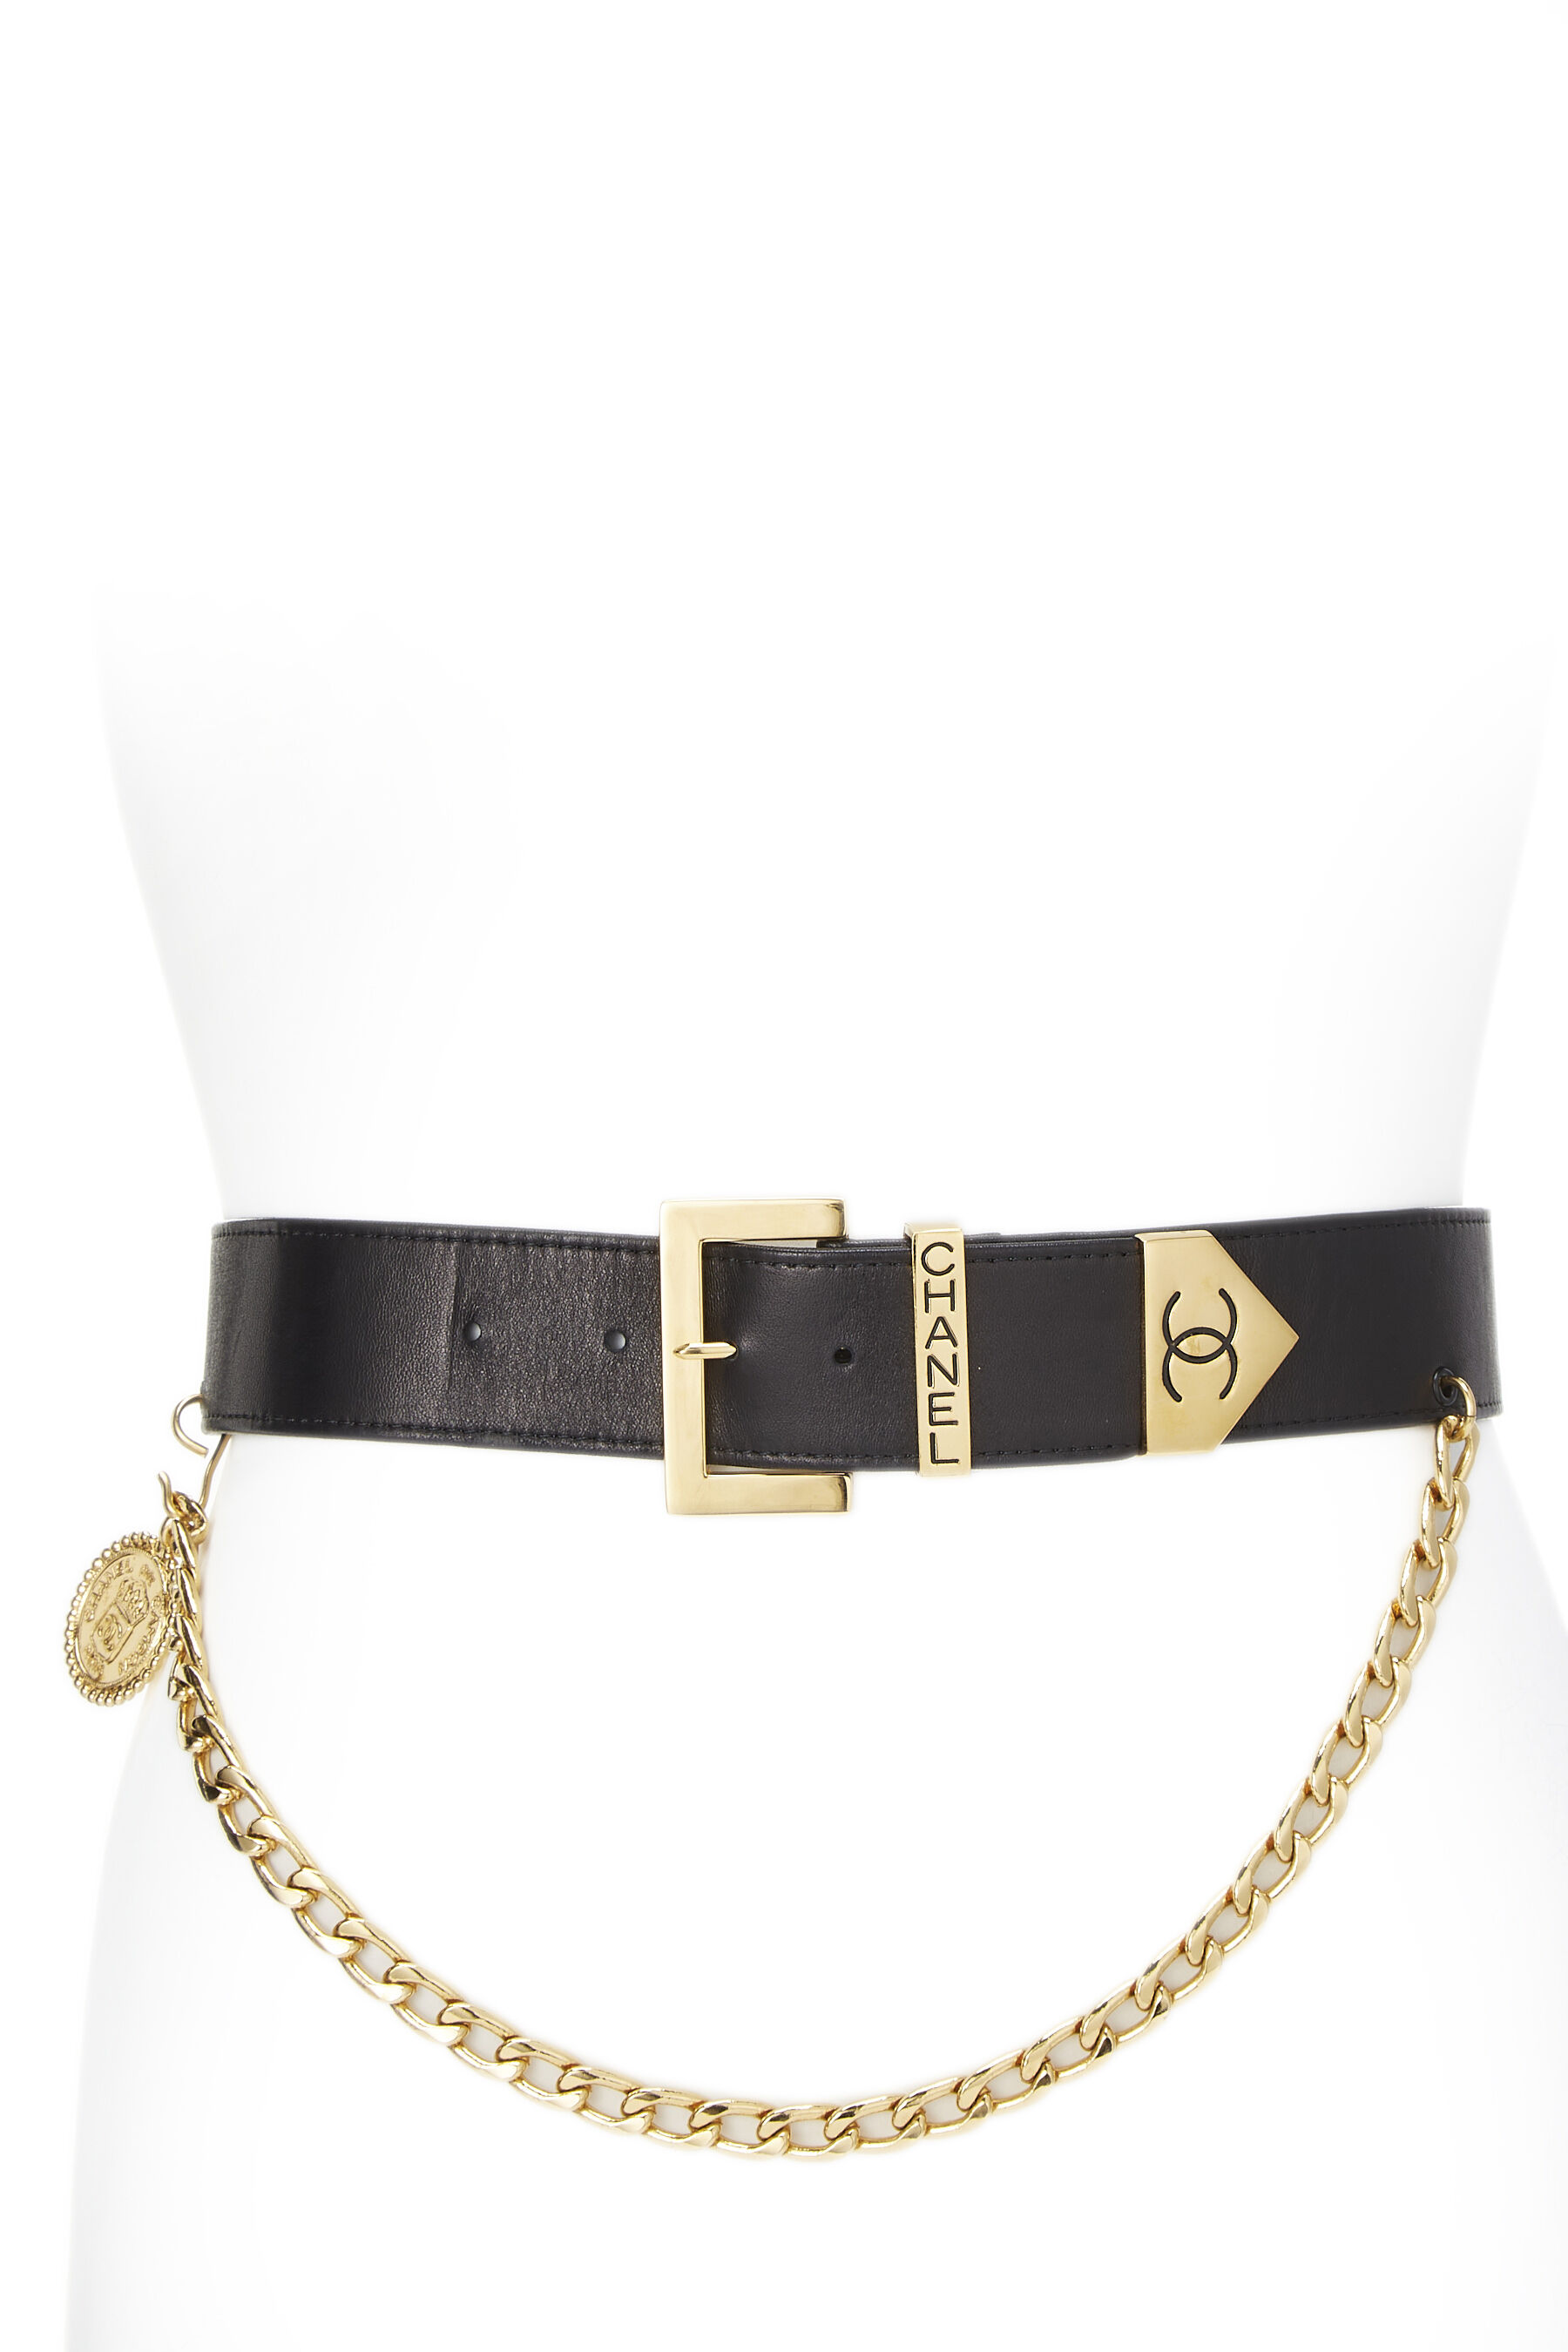 Chanel - Black Leather & Gold Draped Chain Waist Belt 75